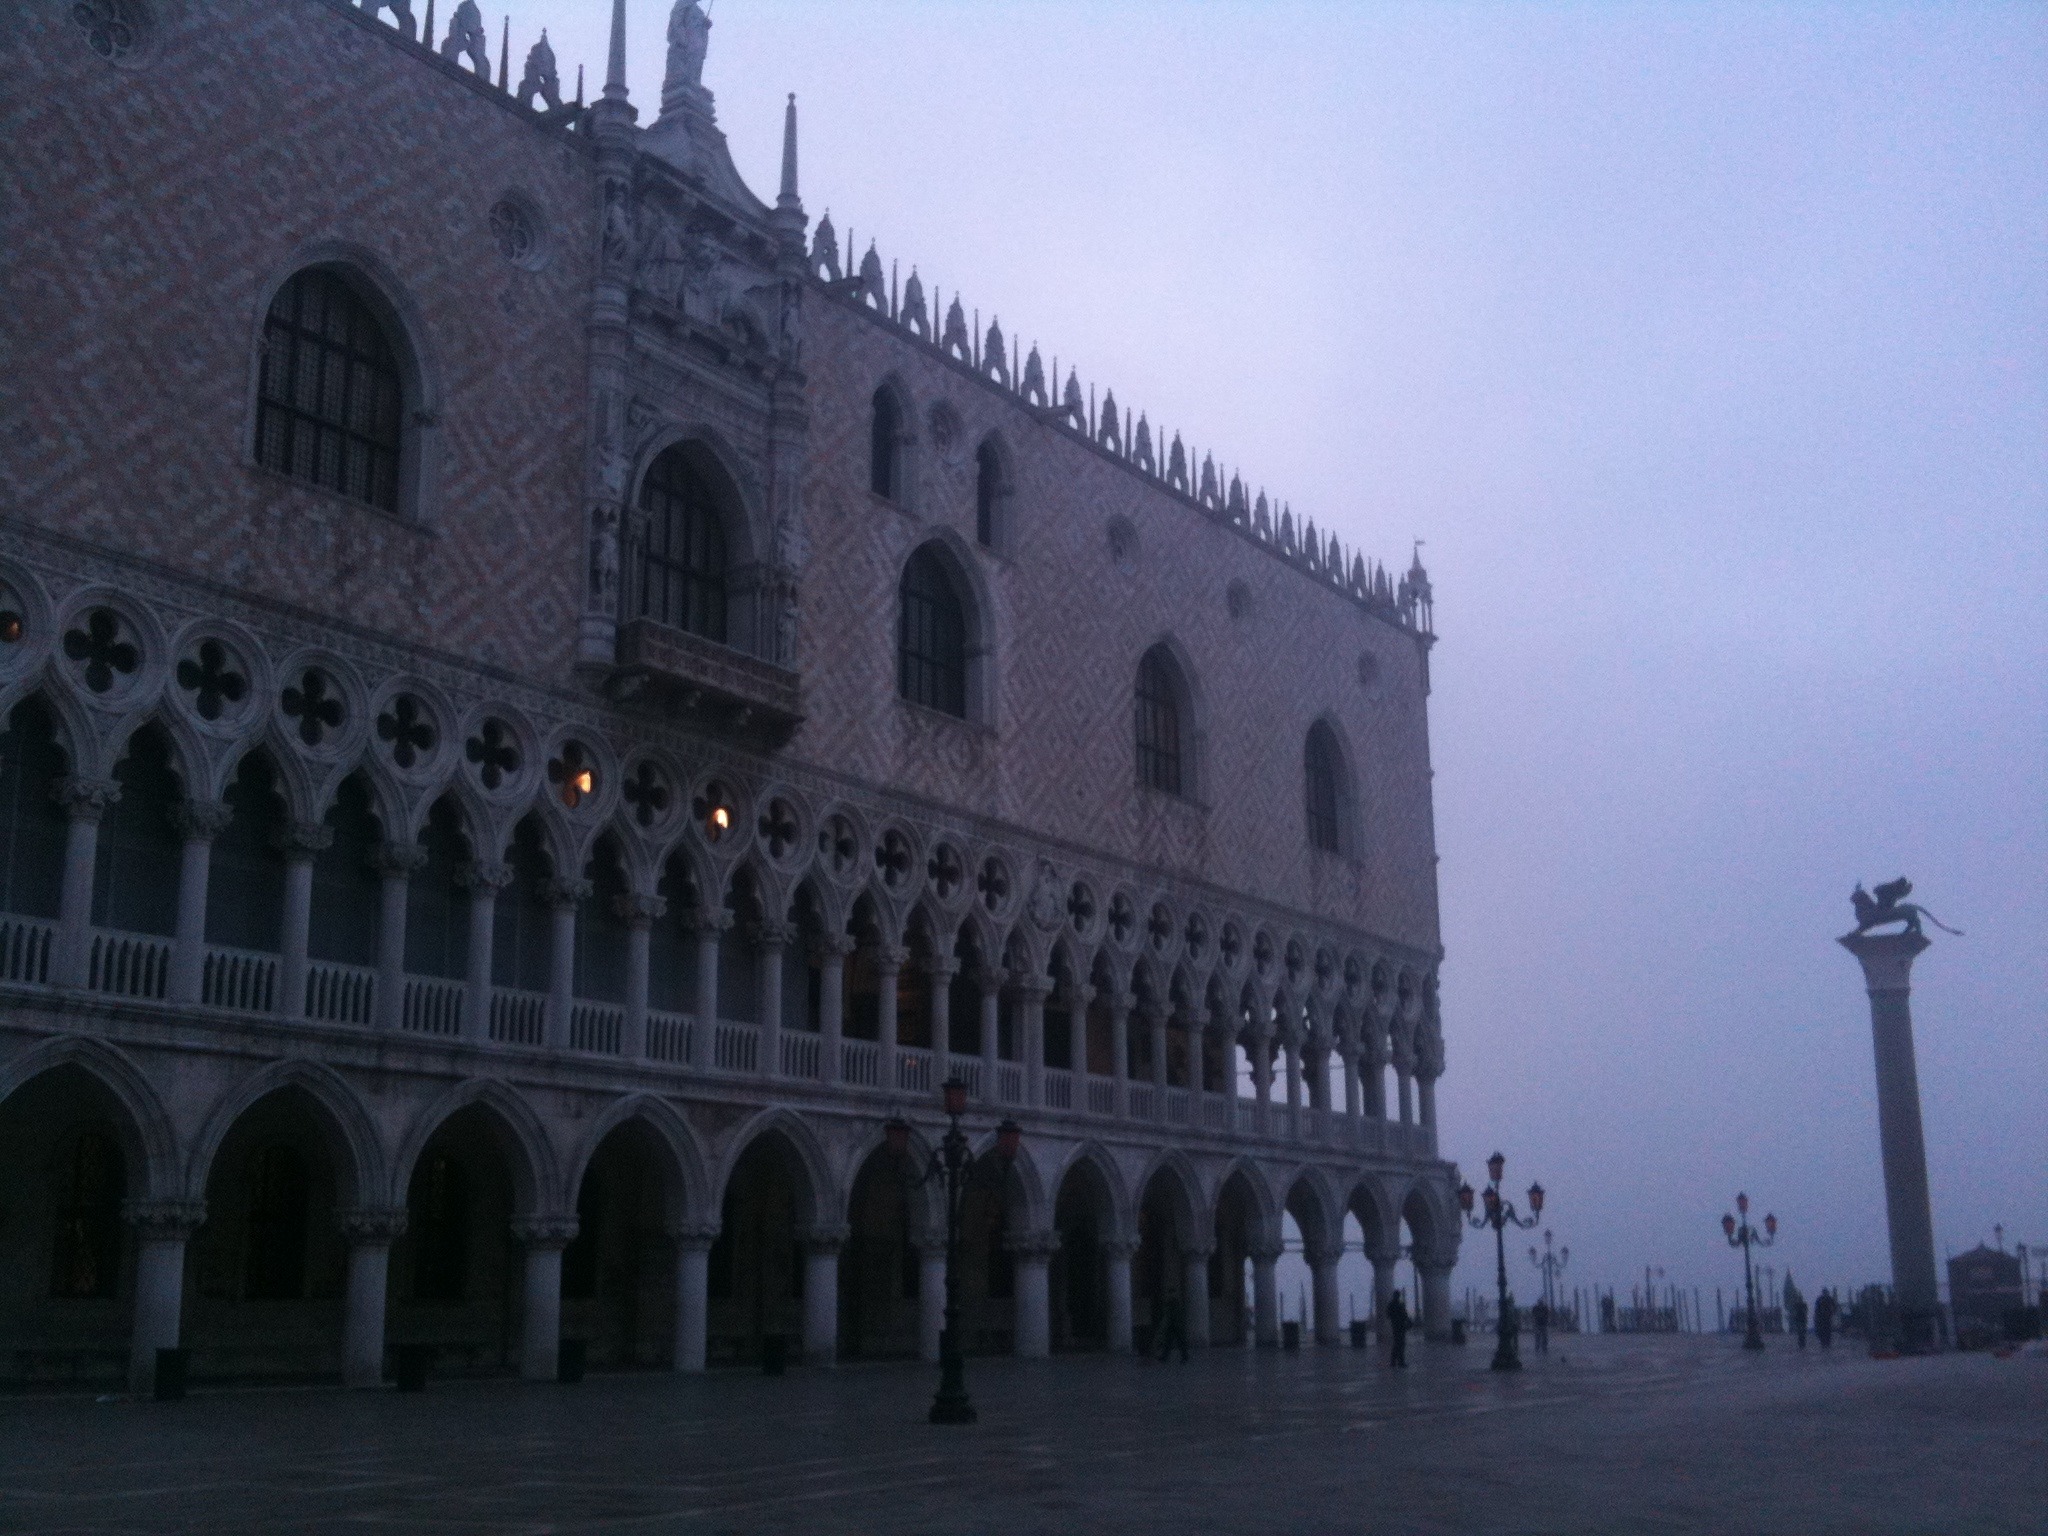 Venice at Daybreak - Mobile Photos - Day 6